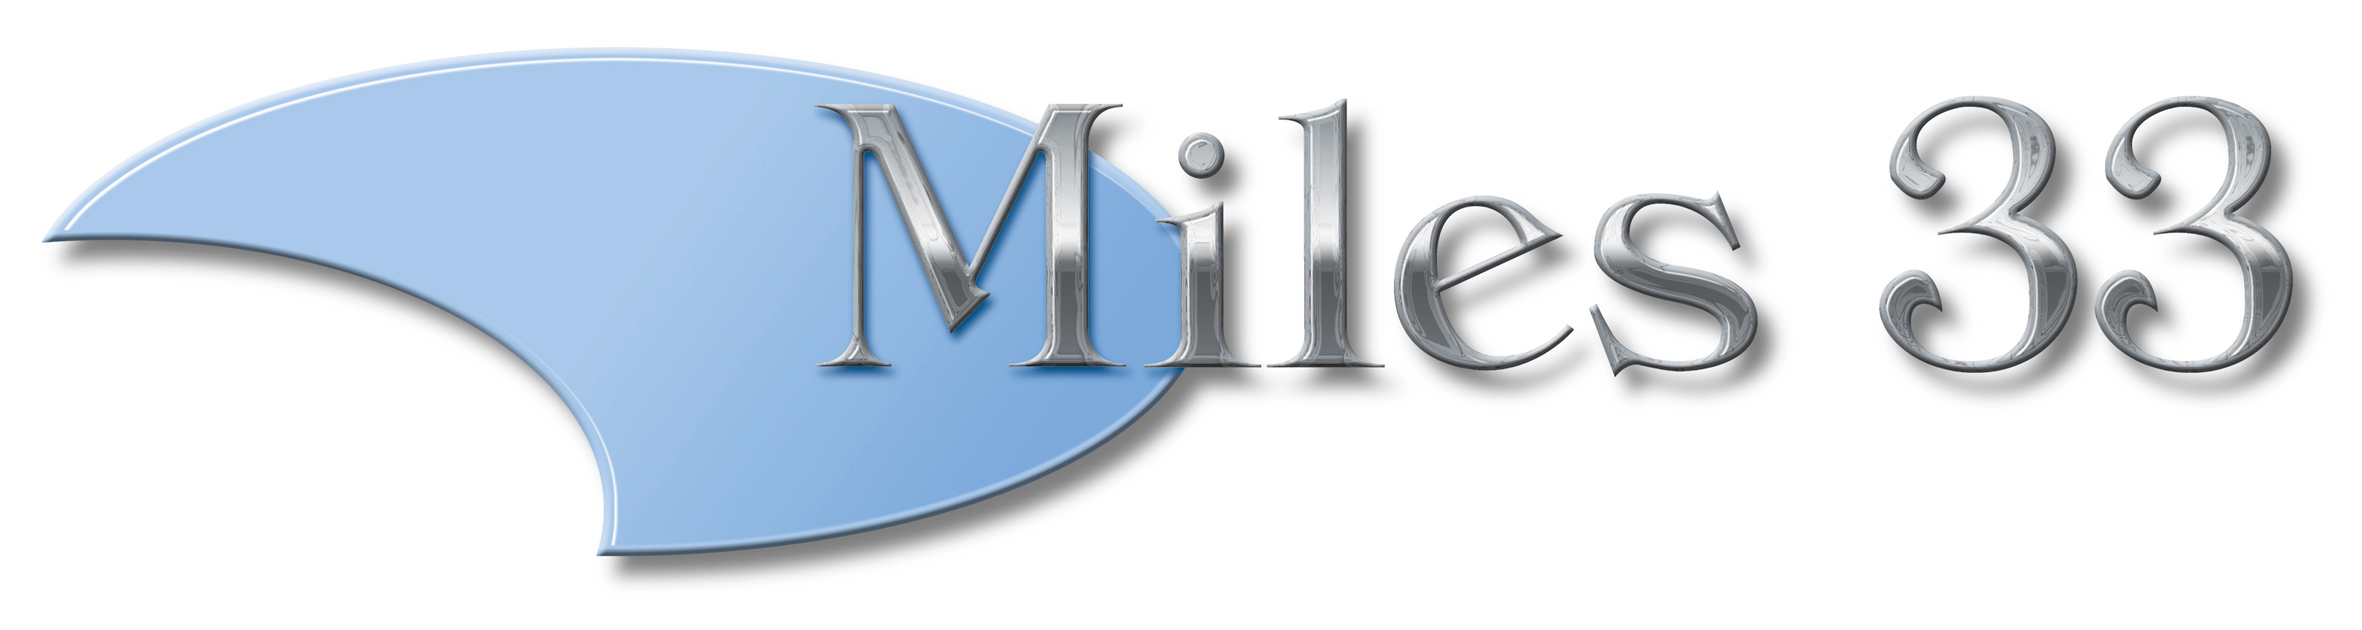 Miles 33 Ltd